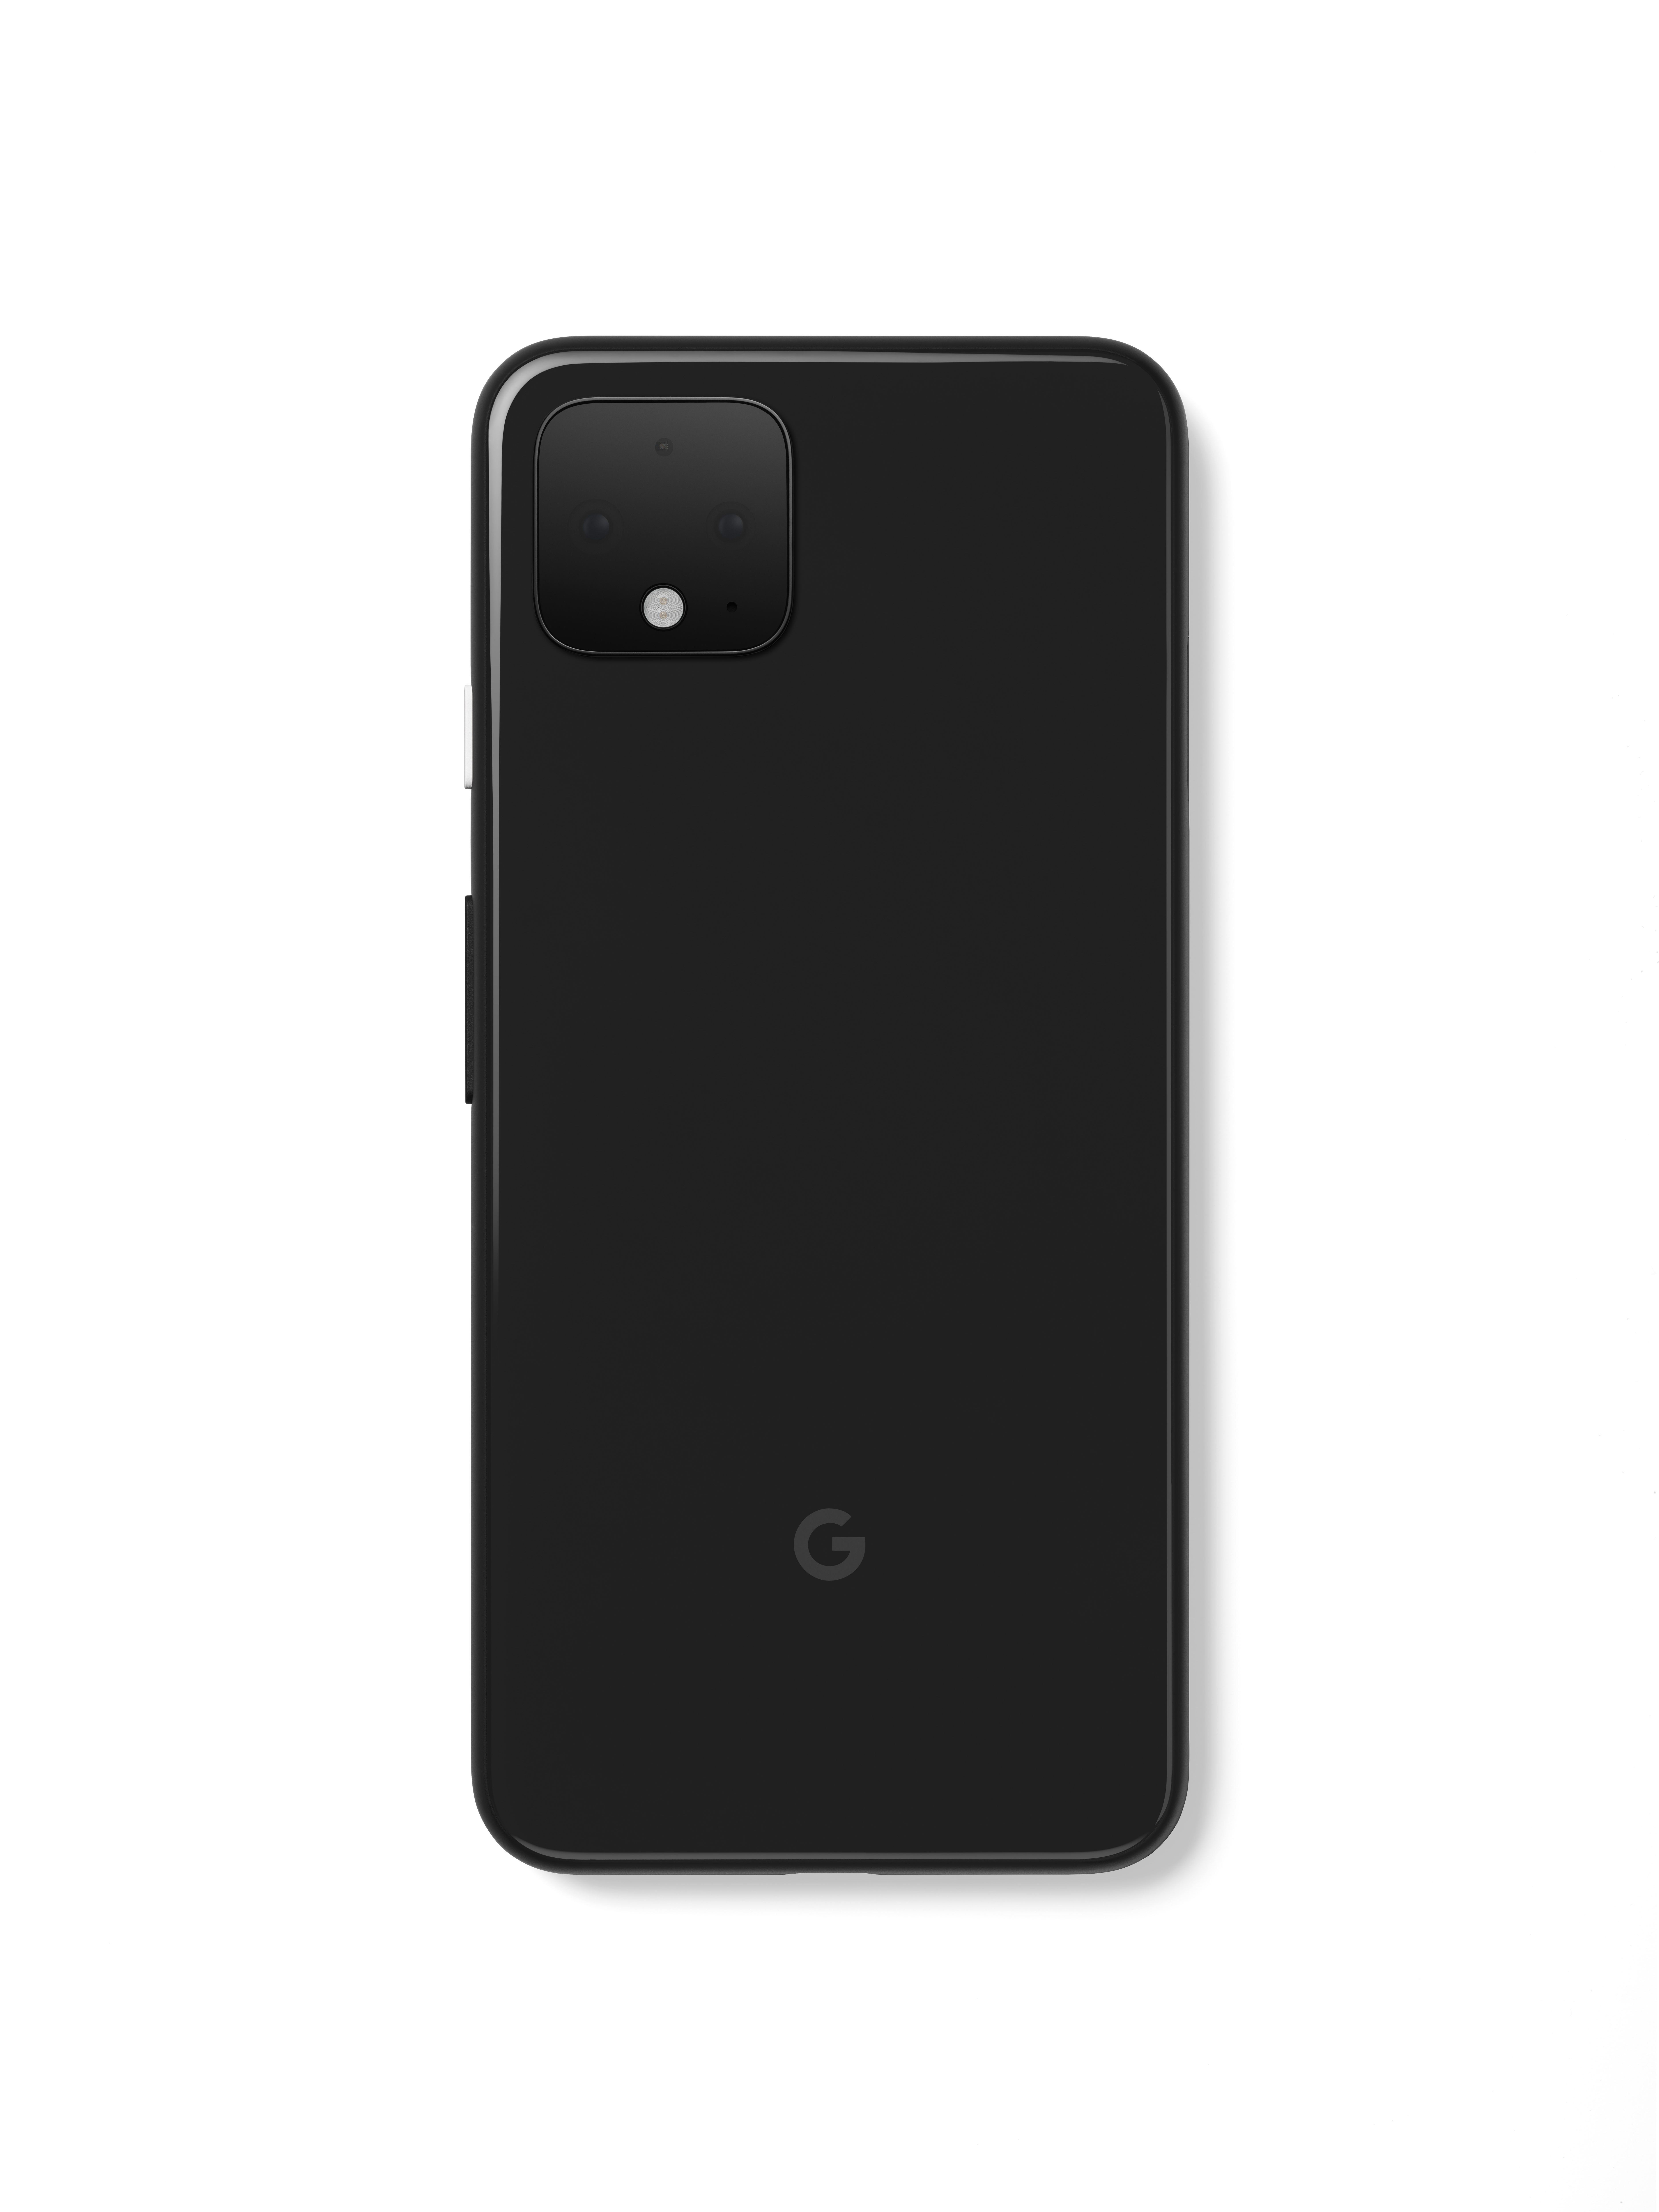 Google Pixel 4 Black 64 GB, Unlocked - image 2 of 5